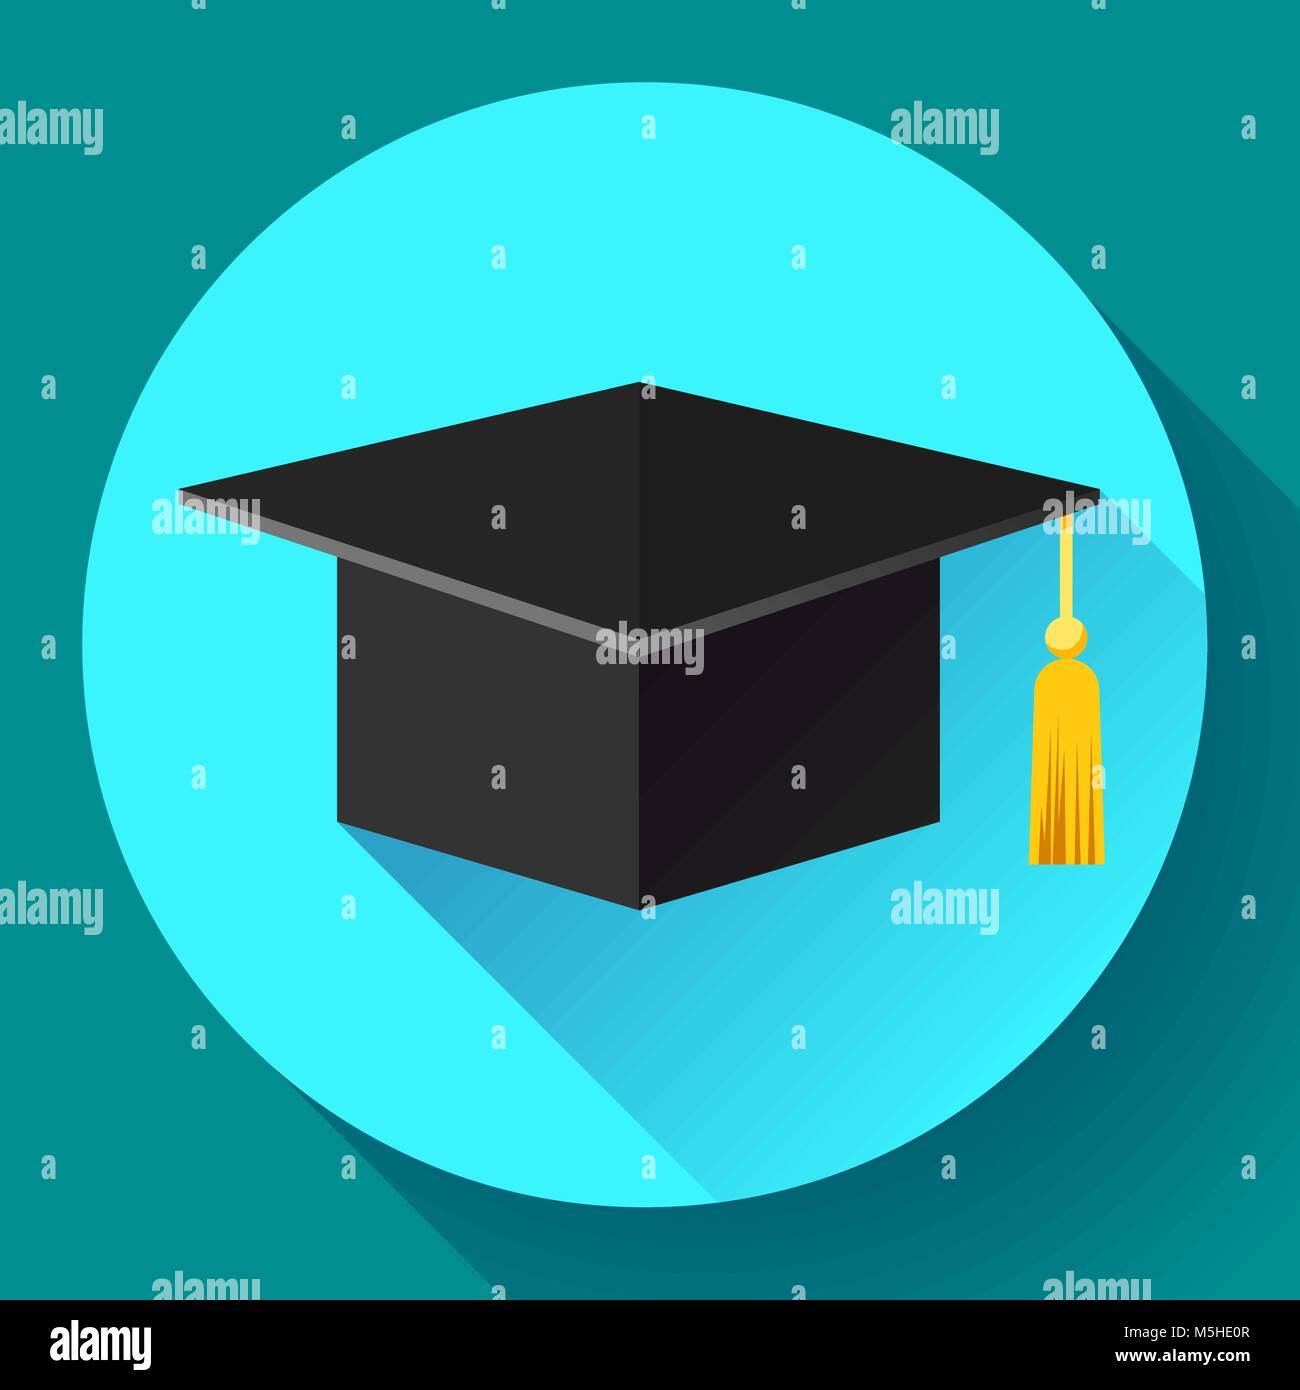 Graduation cap icon. Flat design style. Stock Vector